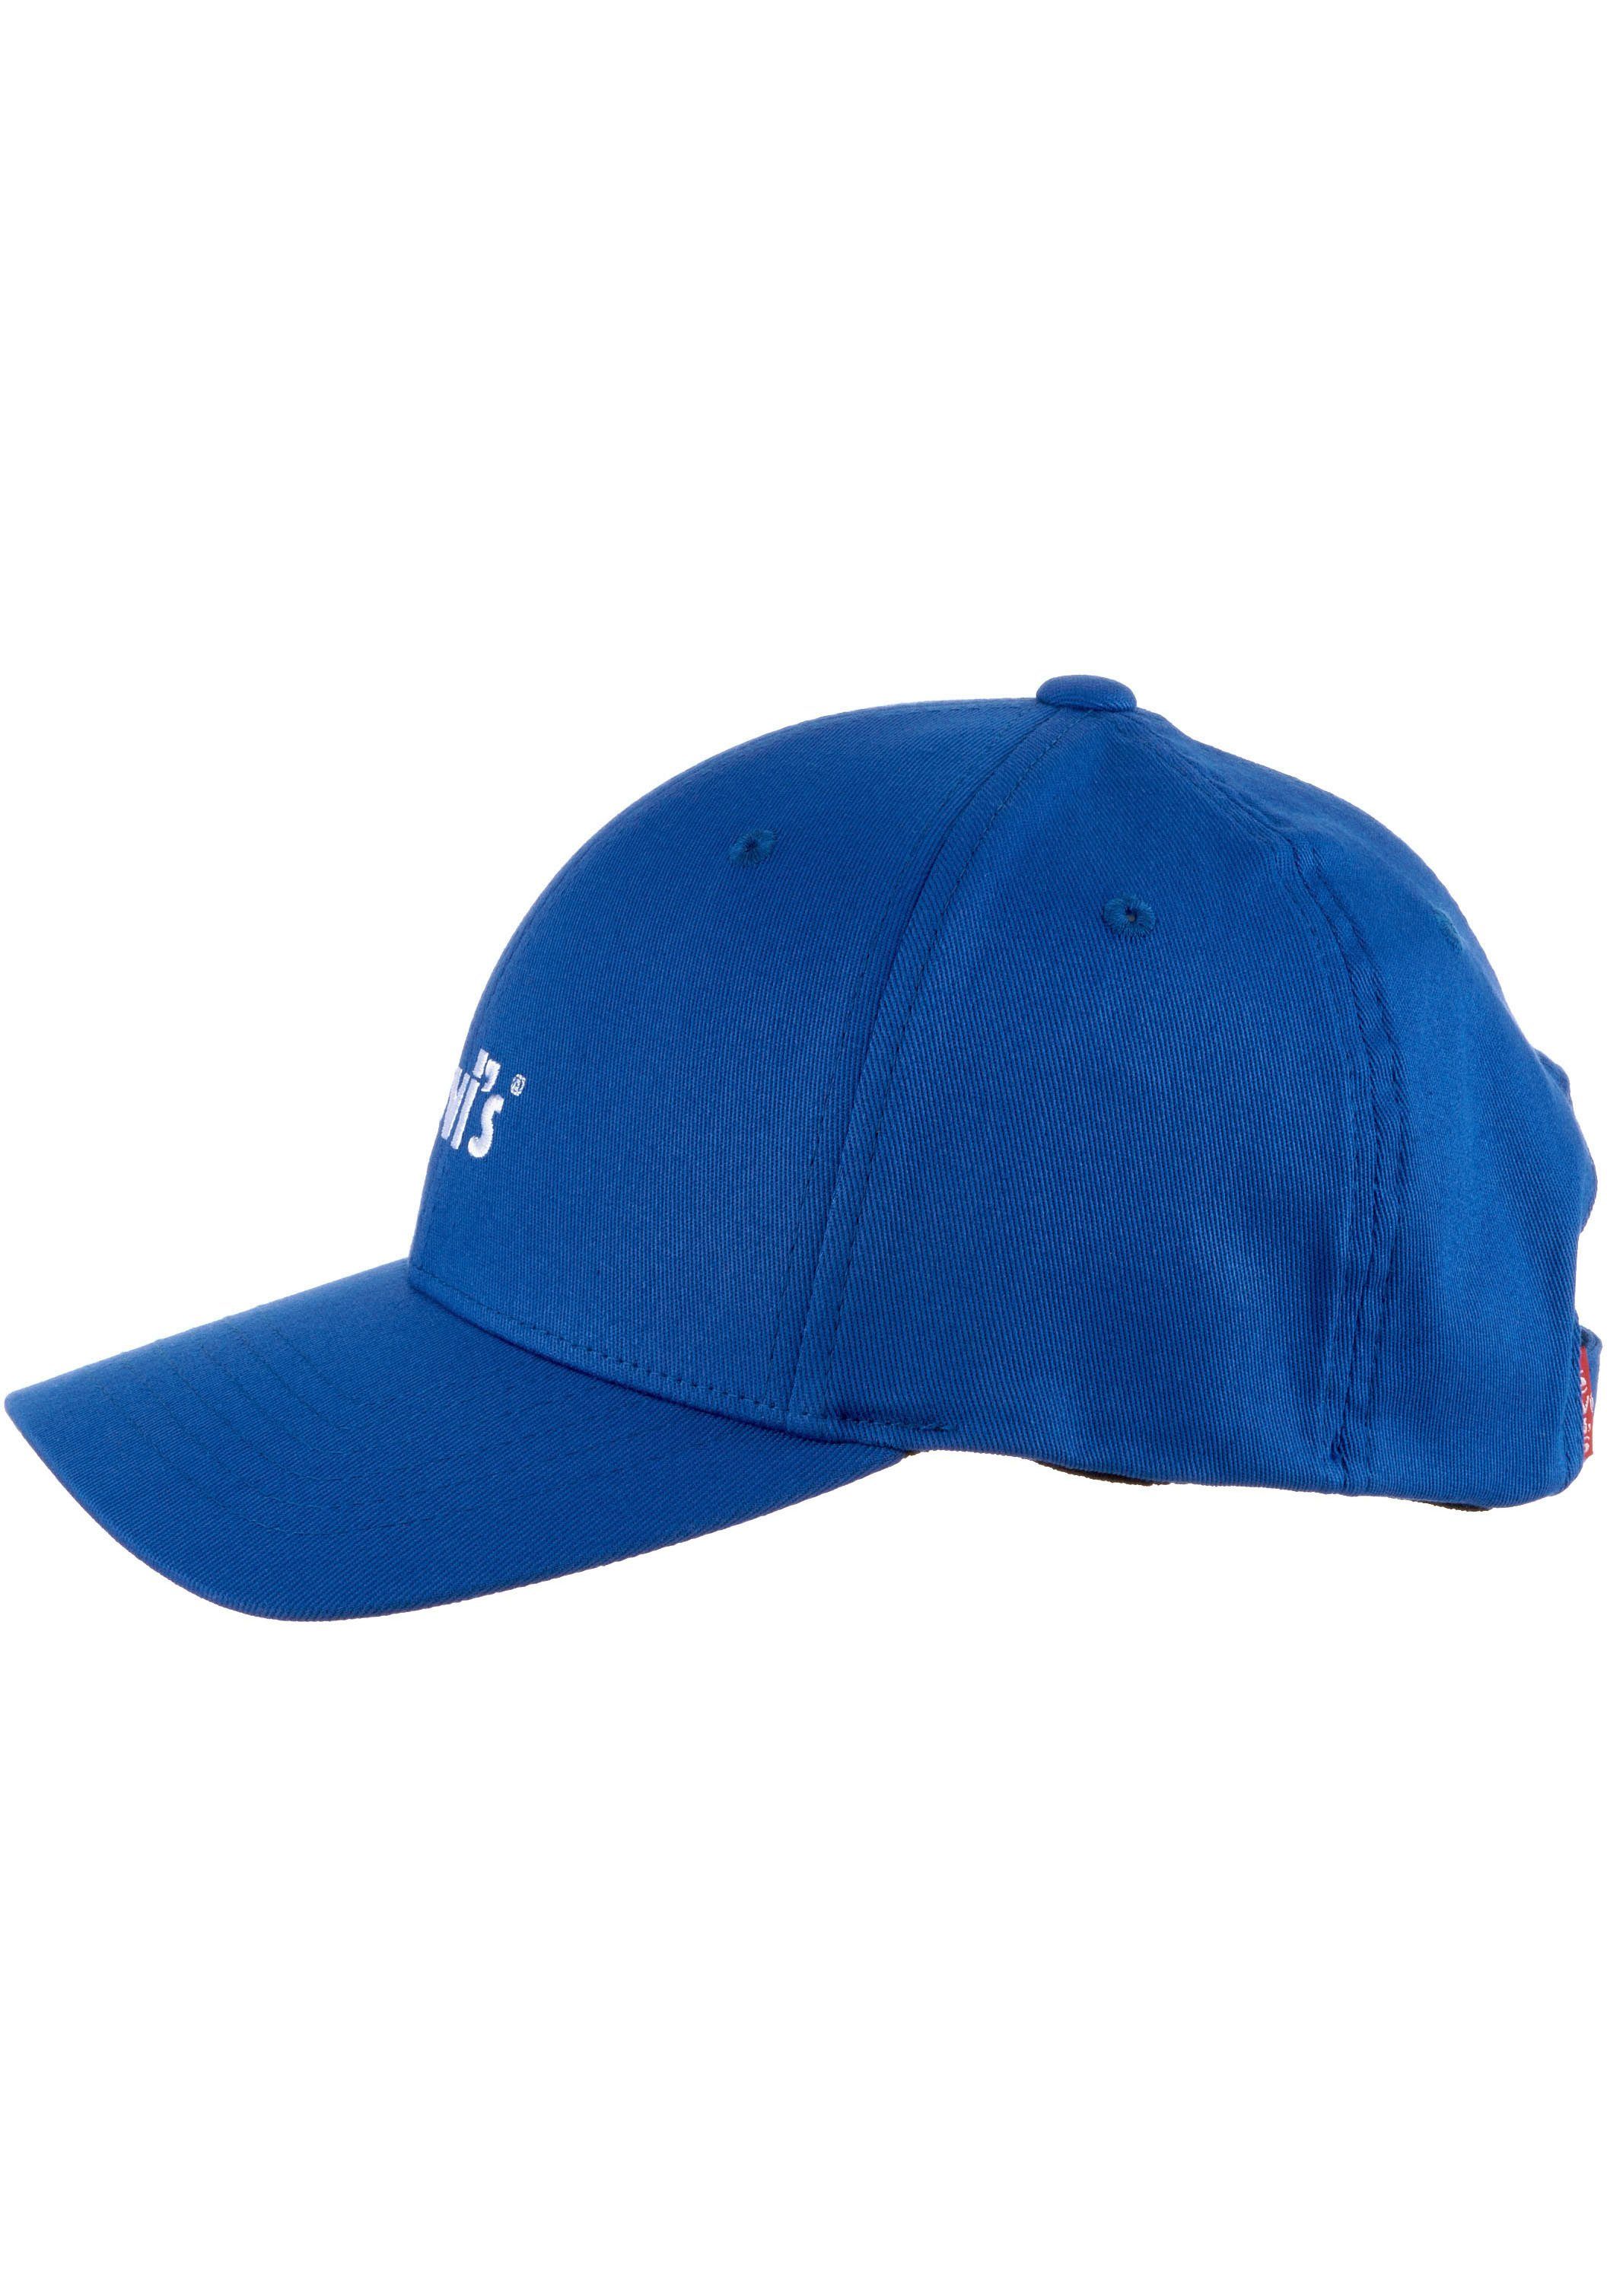 Levi's® Baseball Cap UNISEX royalblau Logo Poster Flexfit Cap